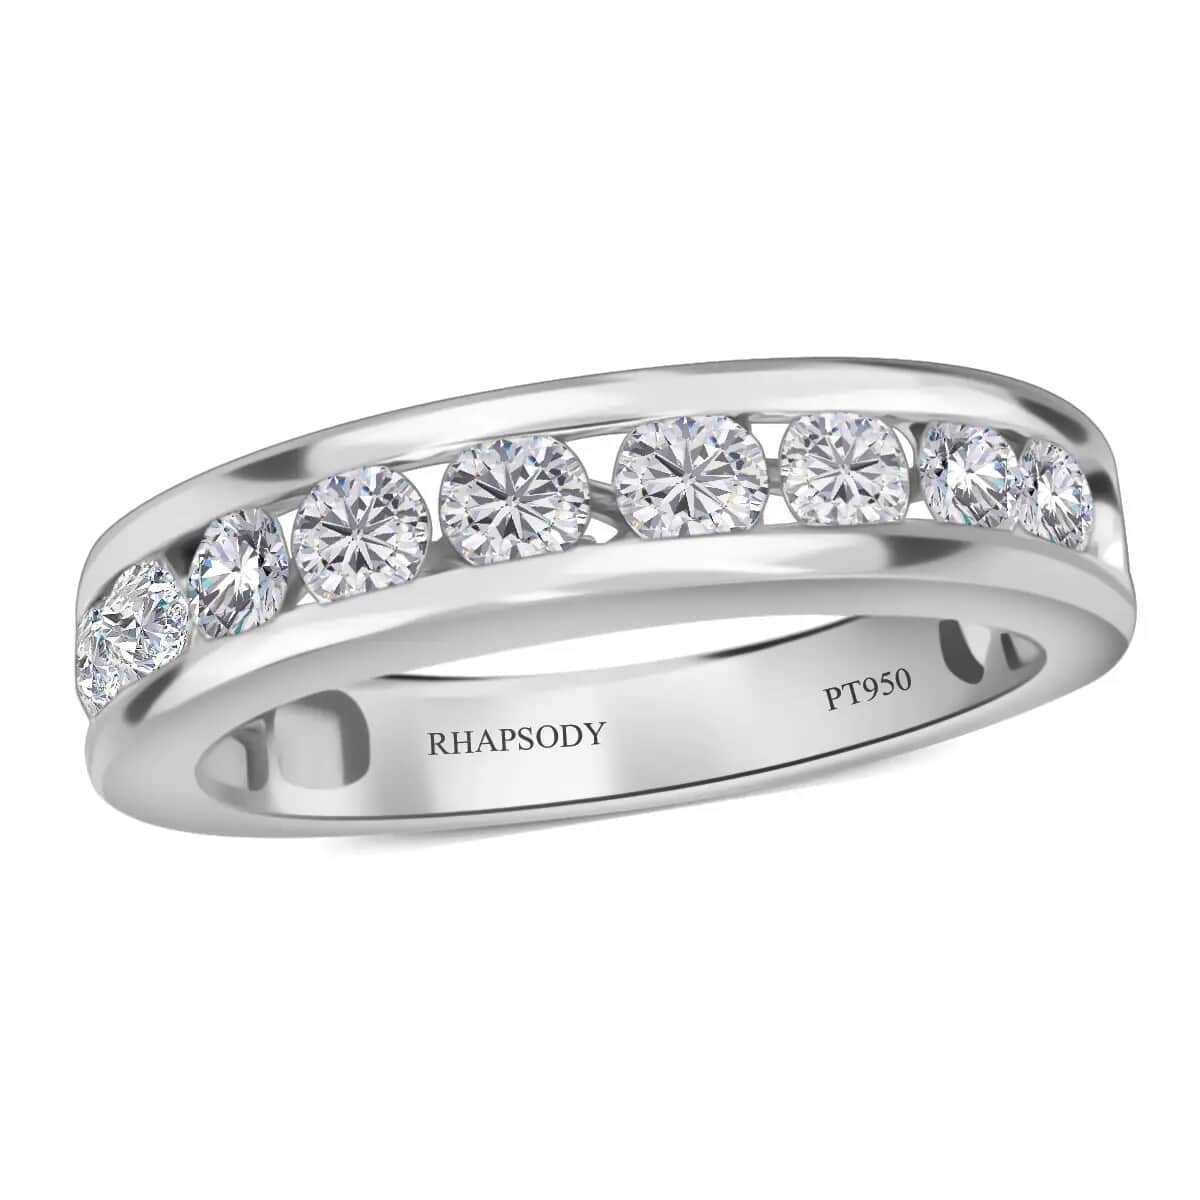 RHAPSODY IGI Certified 950 Platinum Diamond E-F VS Half Eternity Ring (Size 7.0) 5.75 Grams 1.00 ctw image number 0